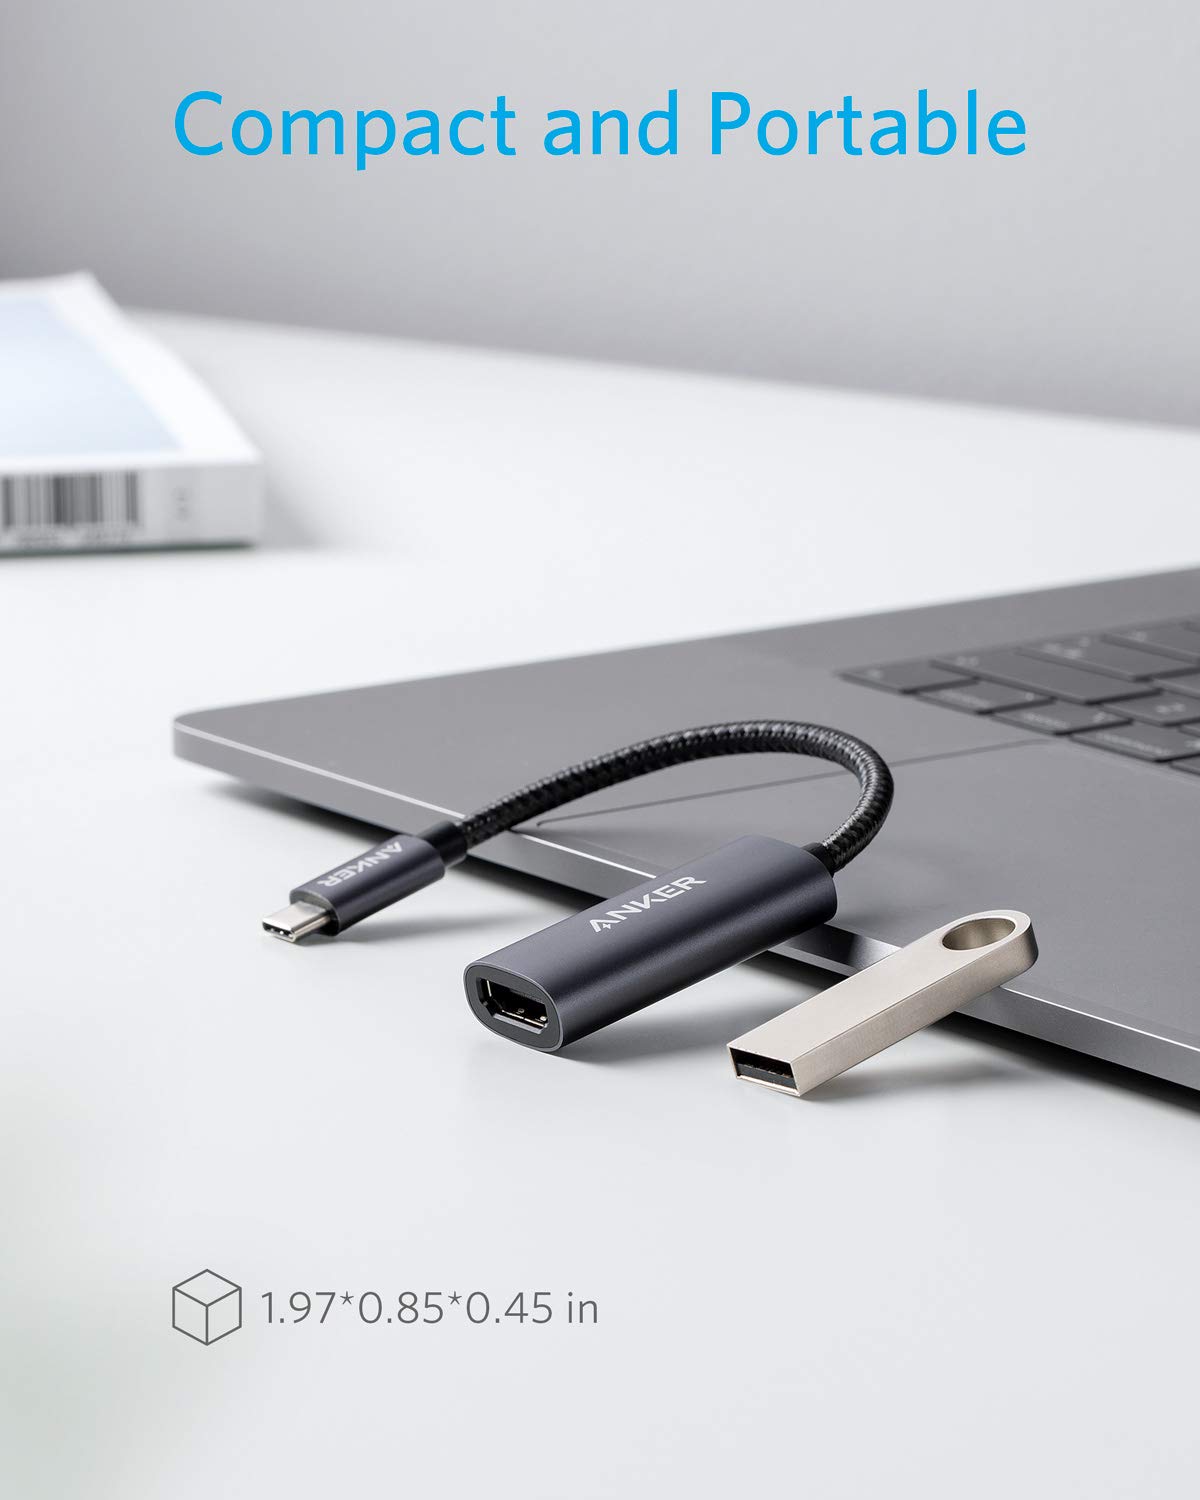 Anker USB C to HDMI Adapter (@60Hz), 310 USB-C (4K HDMI), Aluminum, Portable, for MacBook Pro, Air, iPad pROPixelbook, XPS, Galaxy, and More